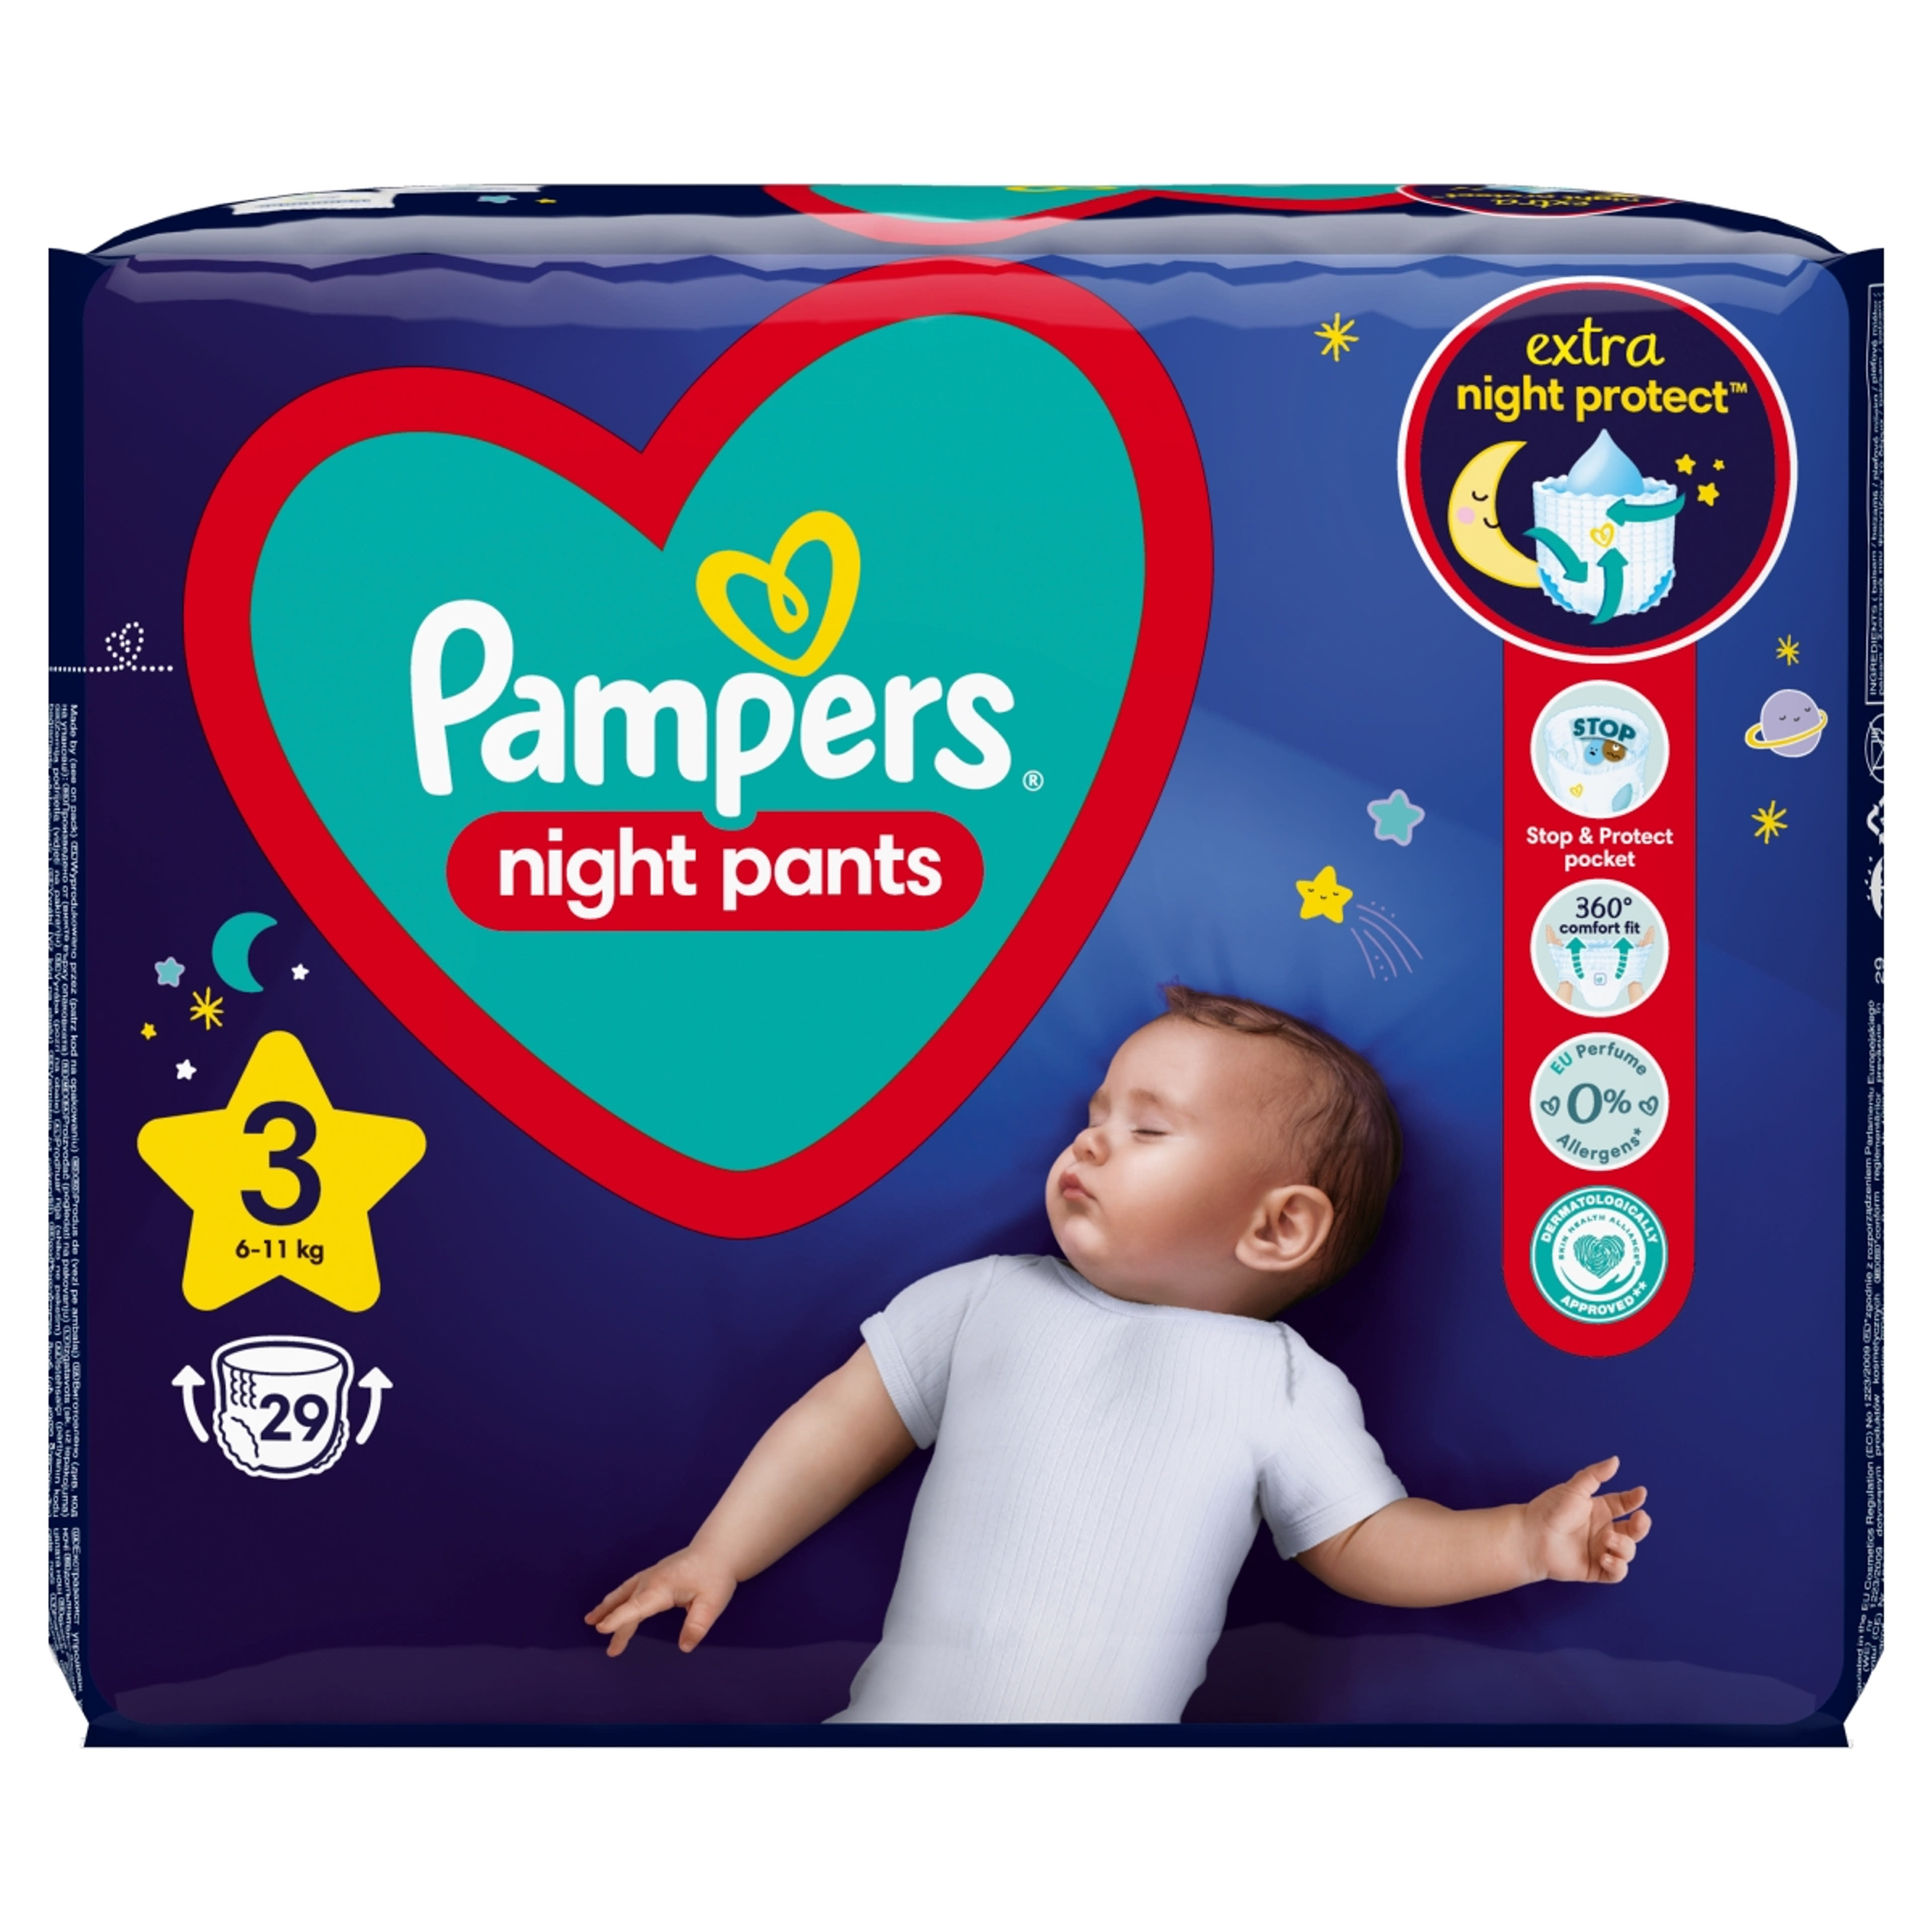 Pampers Night Pants éjszakai bugyipelenka 3-as 6 -11 kg - 29 db